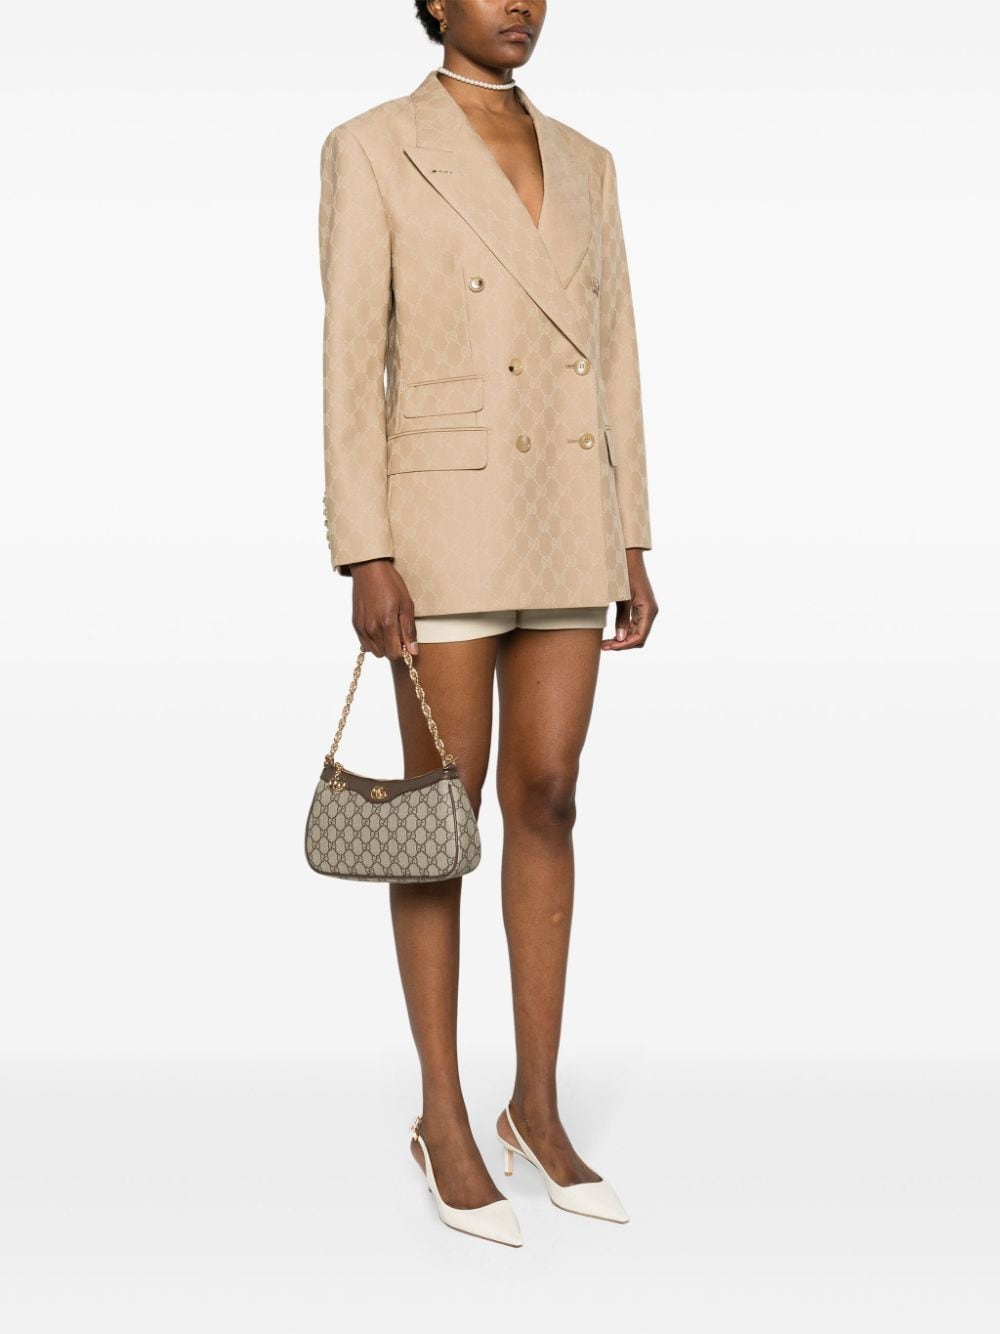 Gucci Small Ophidia Shoulder Bag - Farfetch